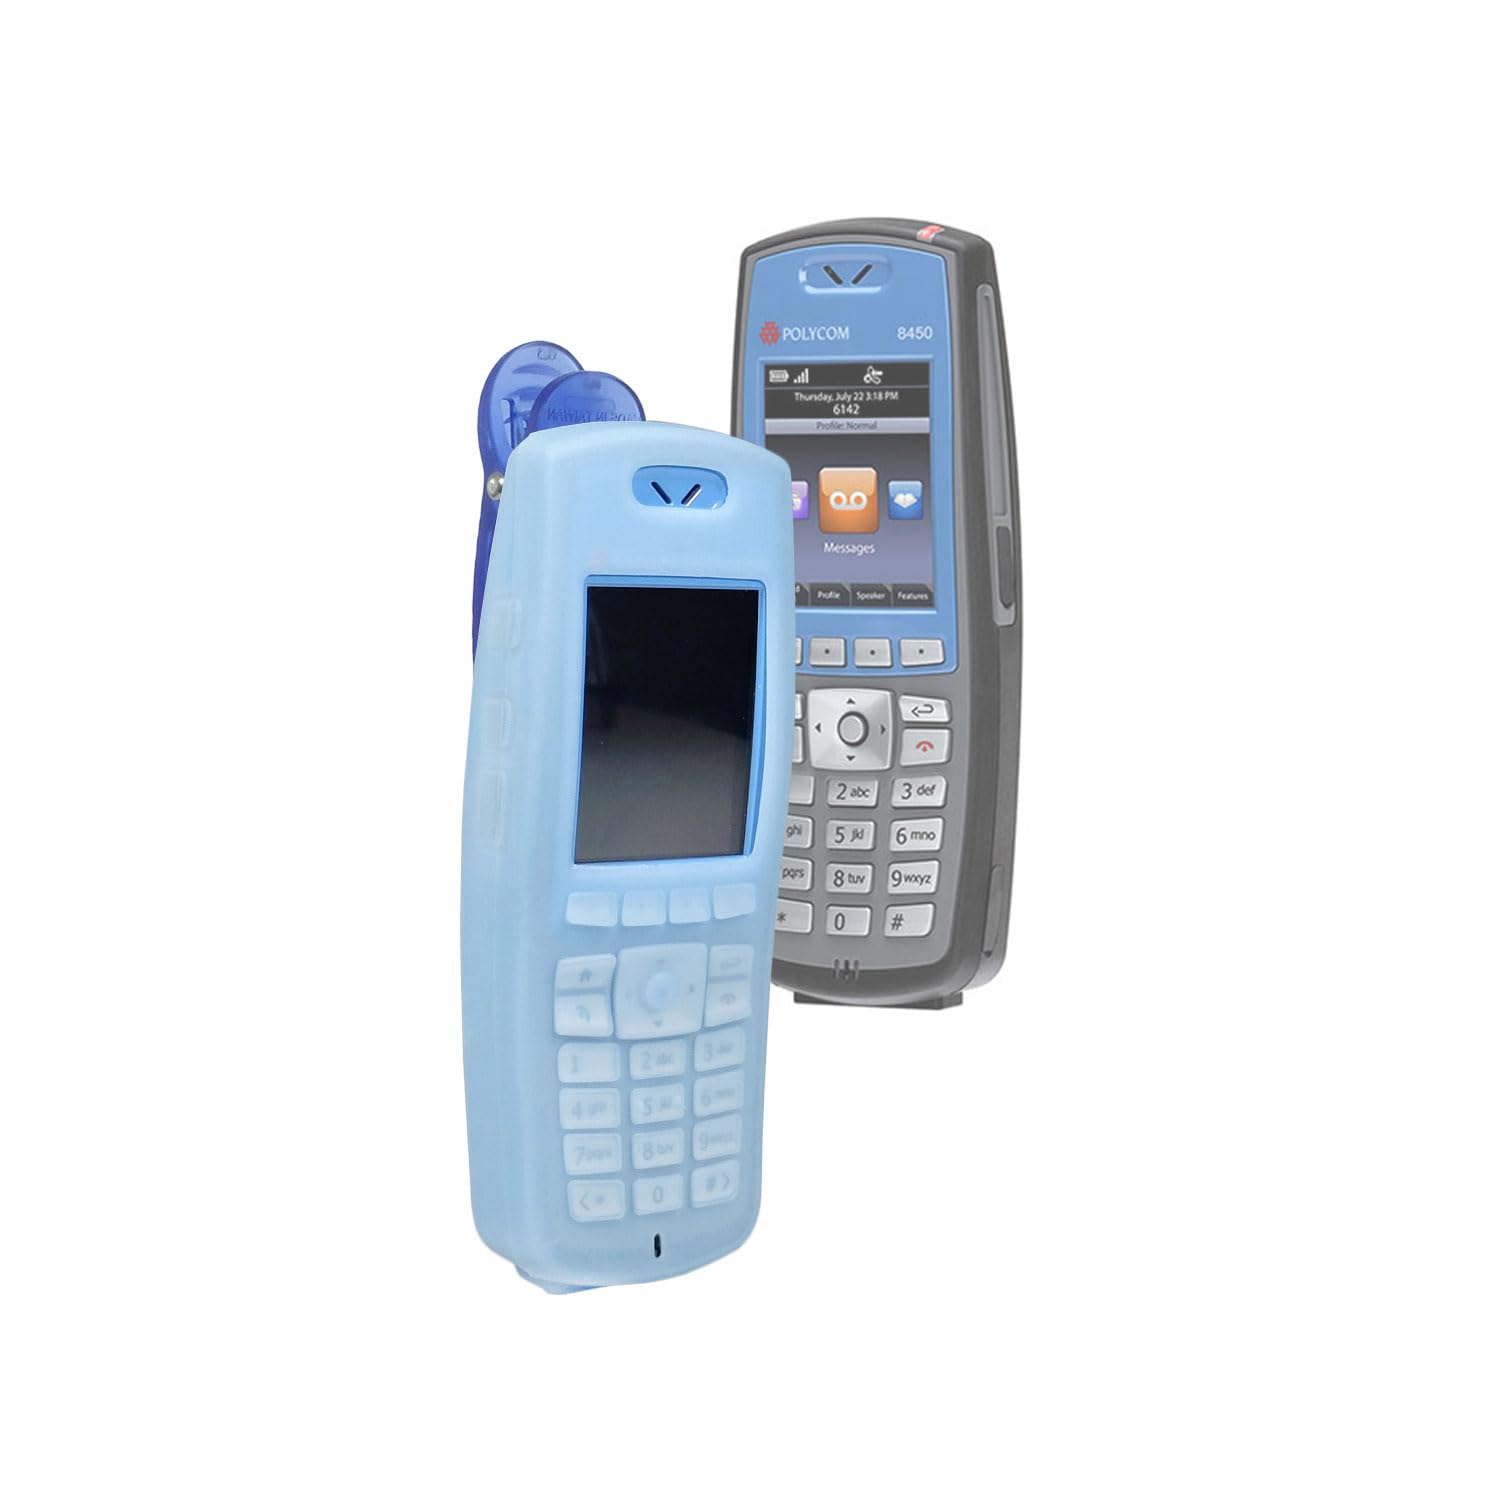 Blue Silicone Gel Case for Polycom SpectraLink 8400 Phones: 2310-37180-002